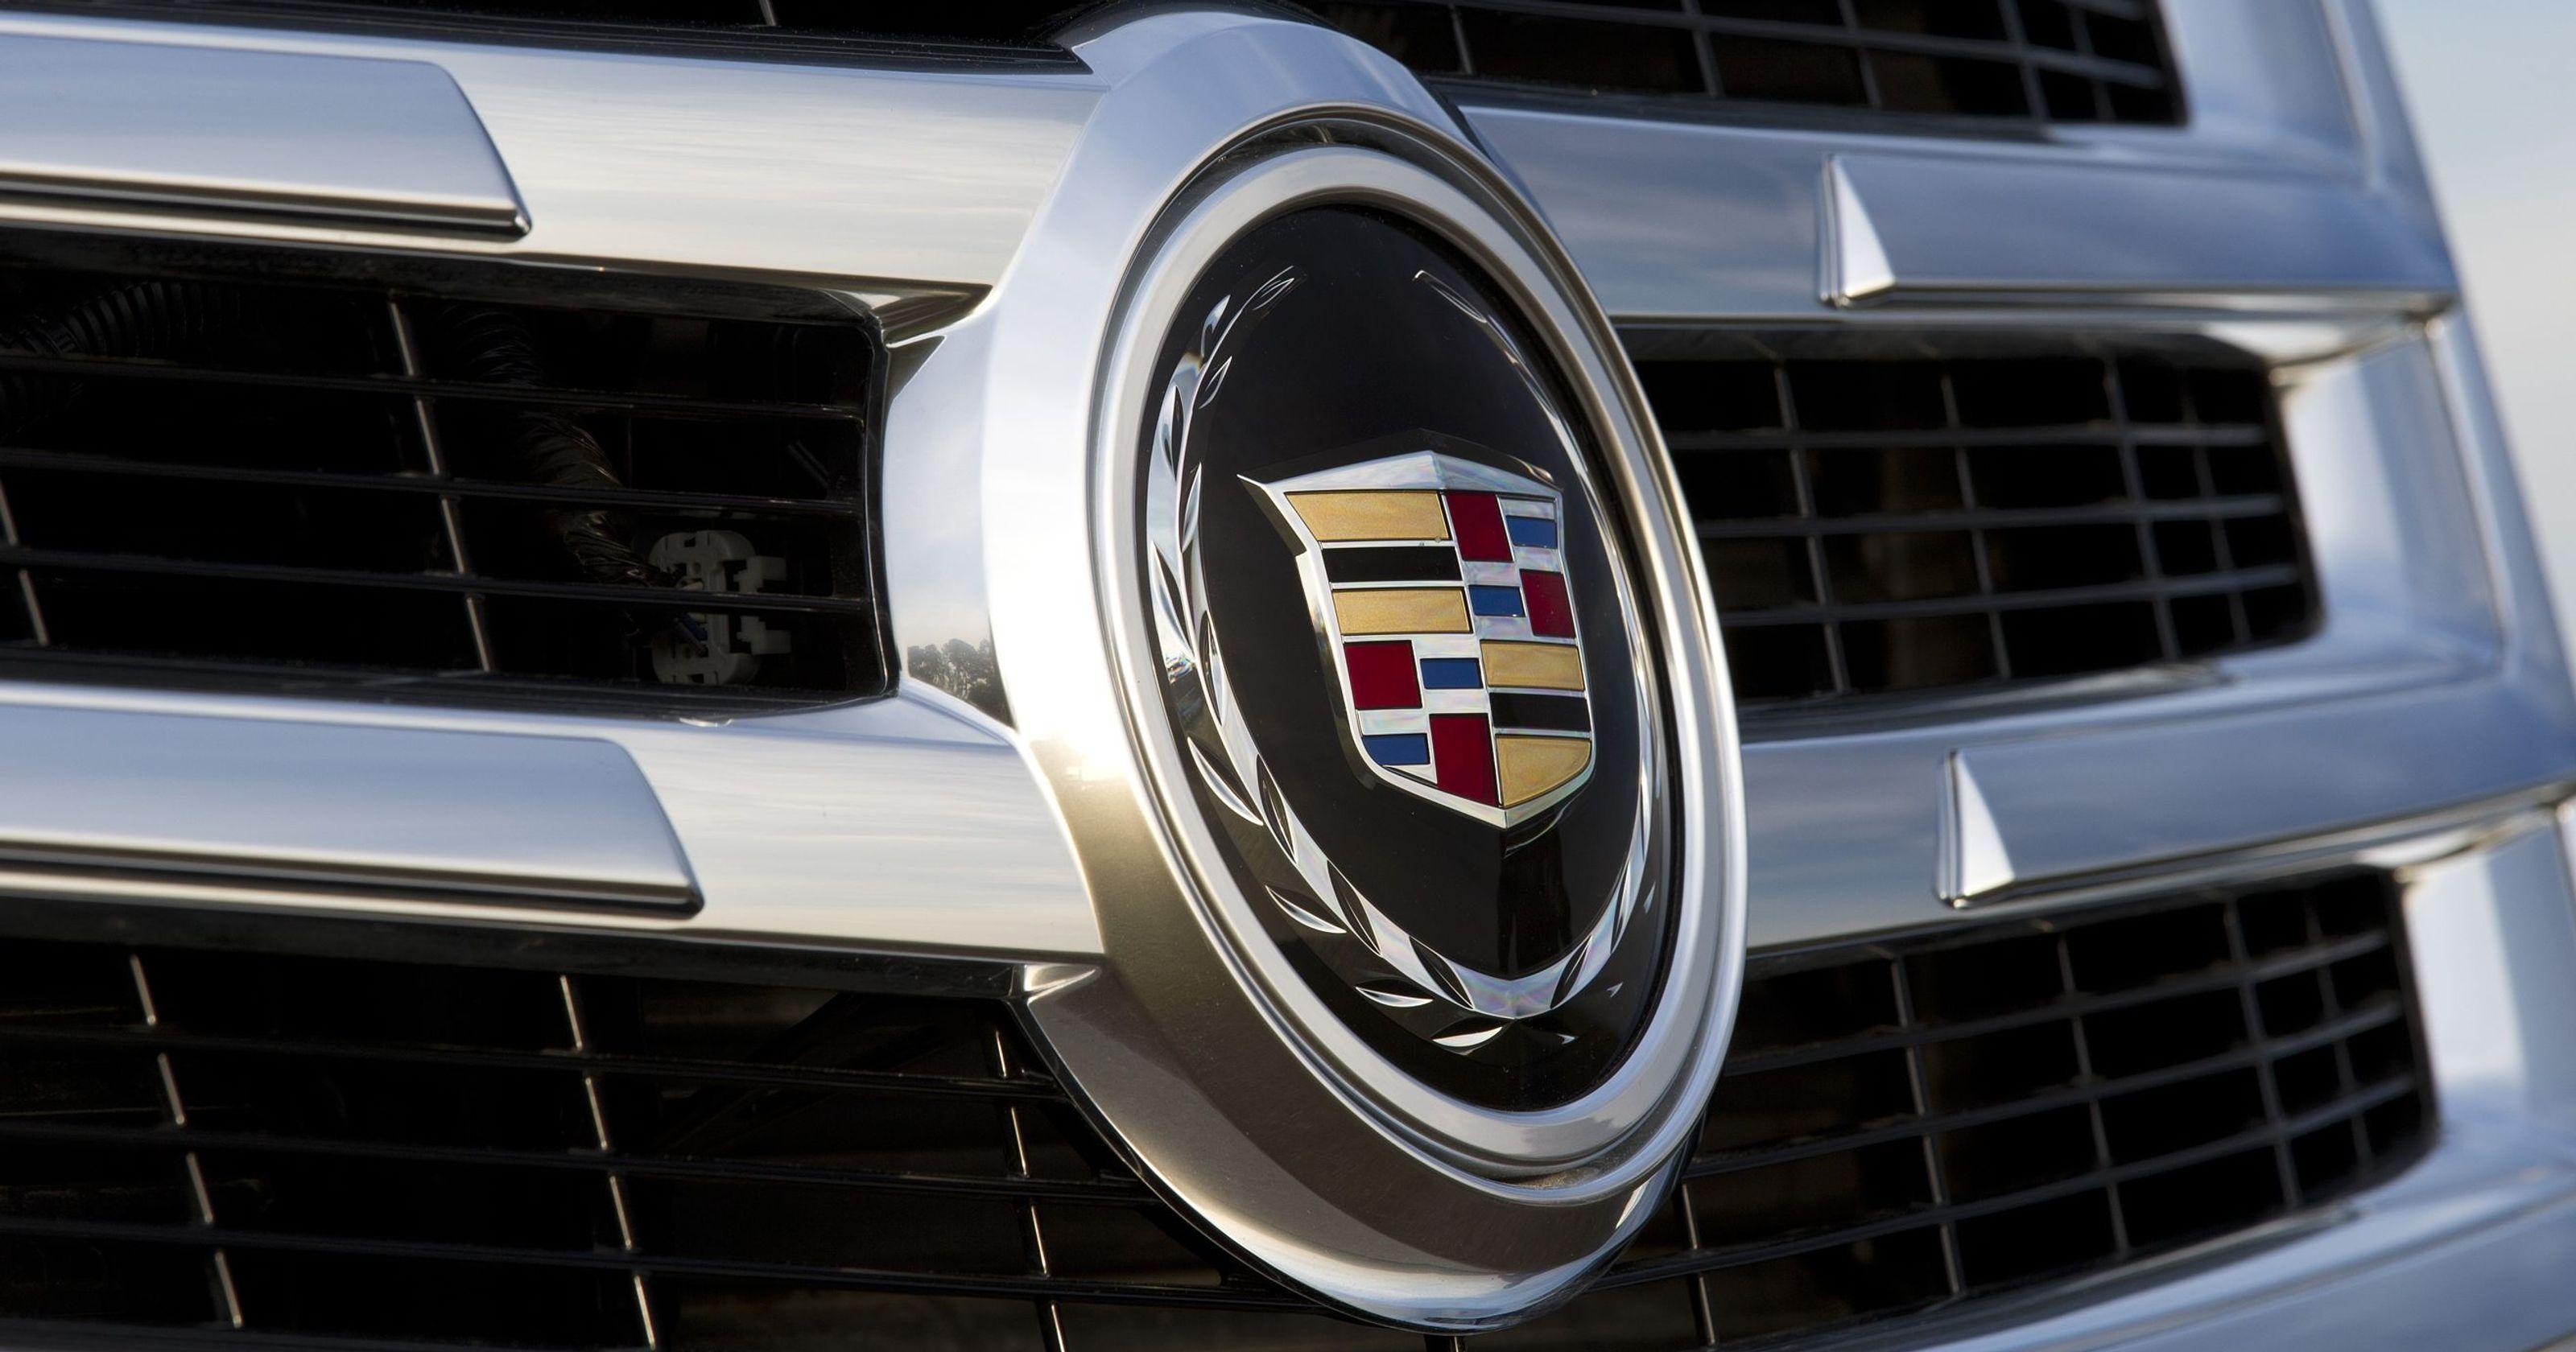 2014 New Cadillac Logo - Almost All New Escalade Has Old Cadillac Badge